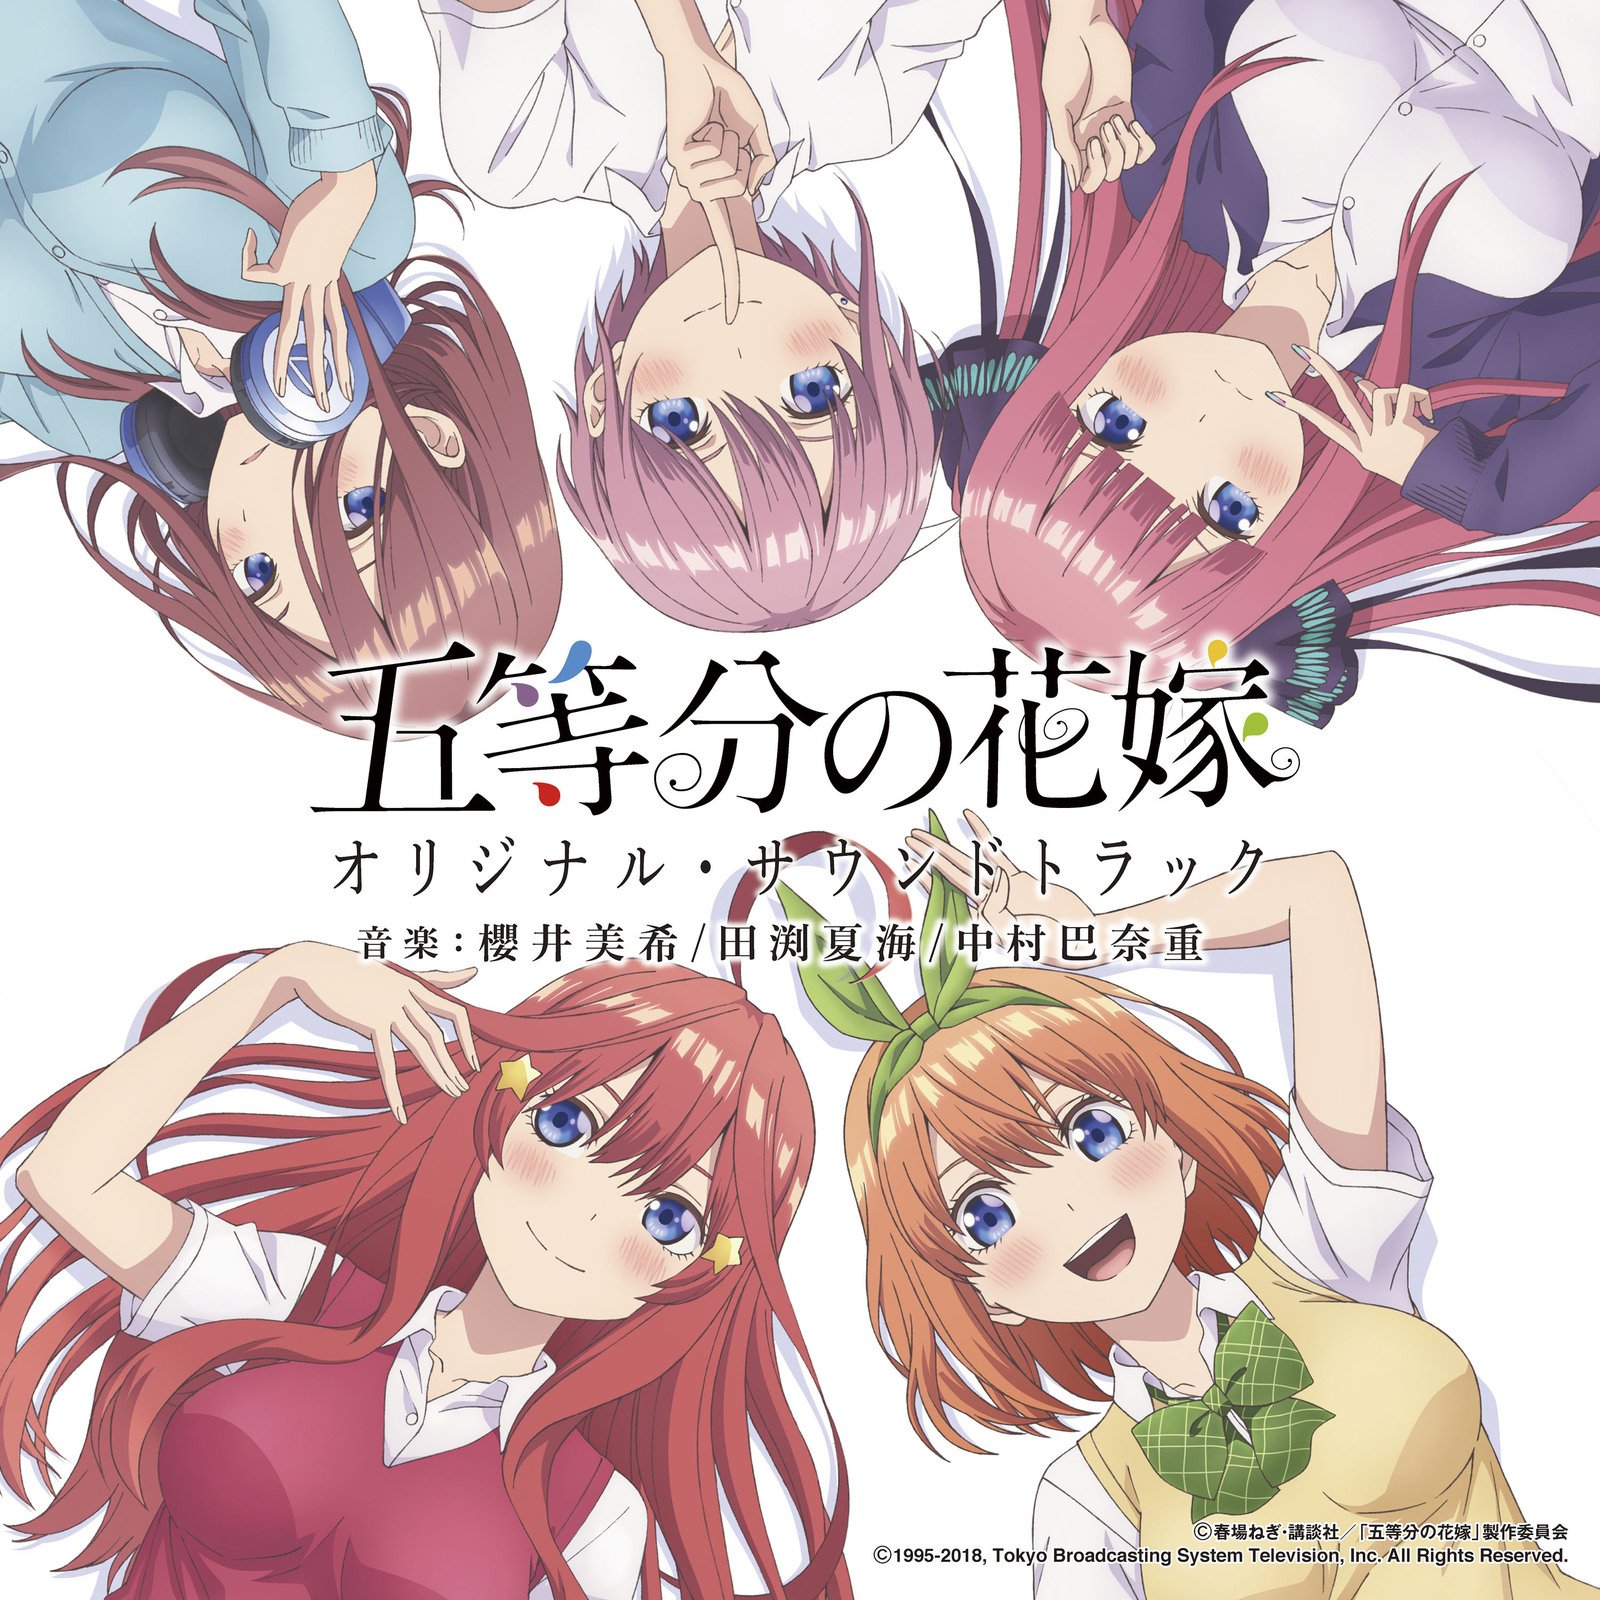 DVD Anime The Quintessential Quintuplets Season 1+2 Series (1-24 End)  English